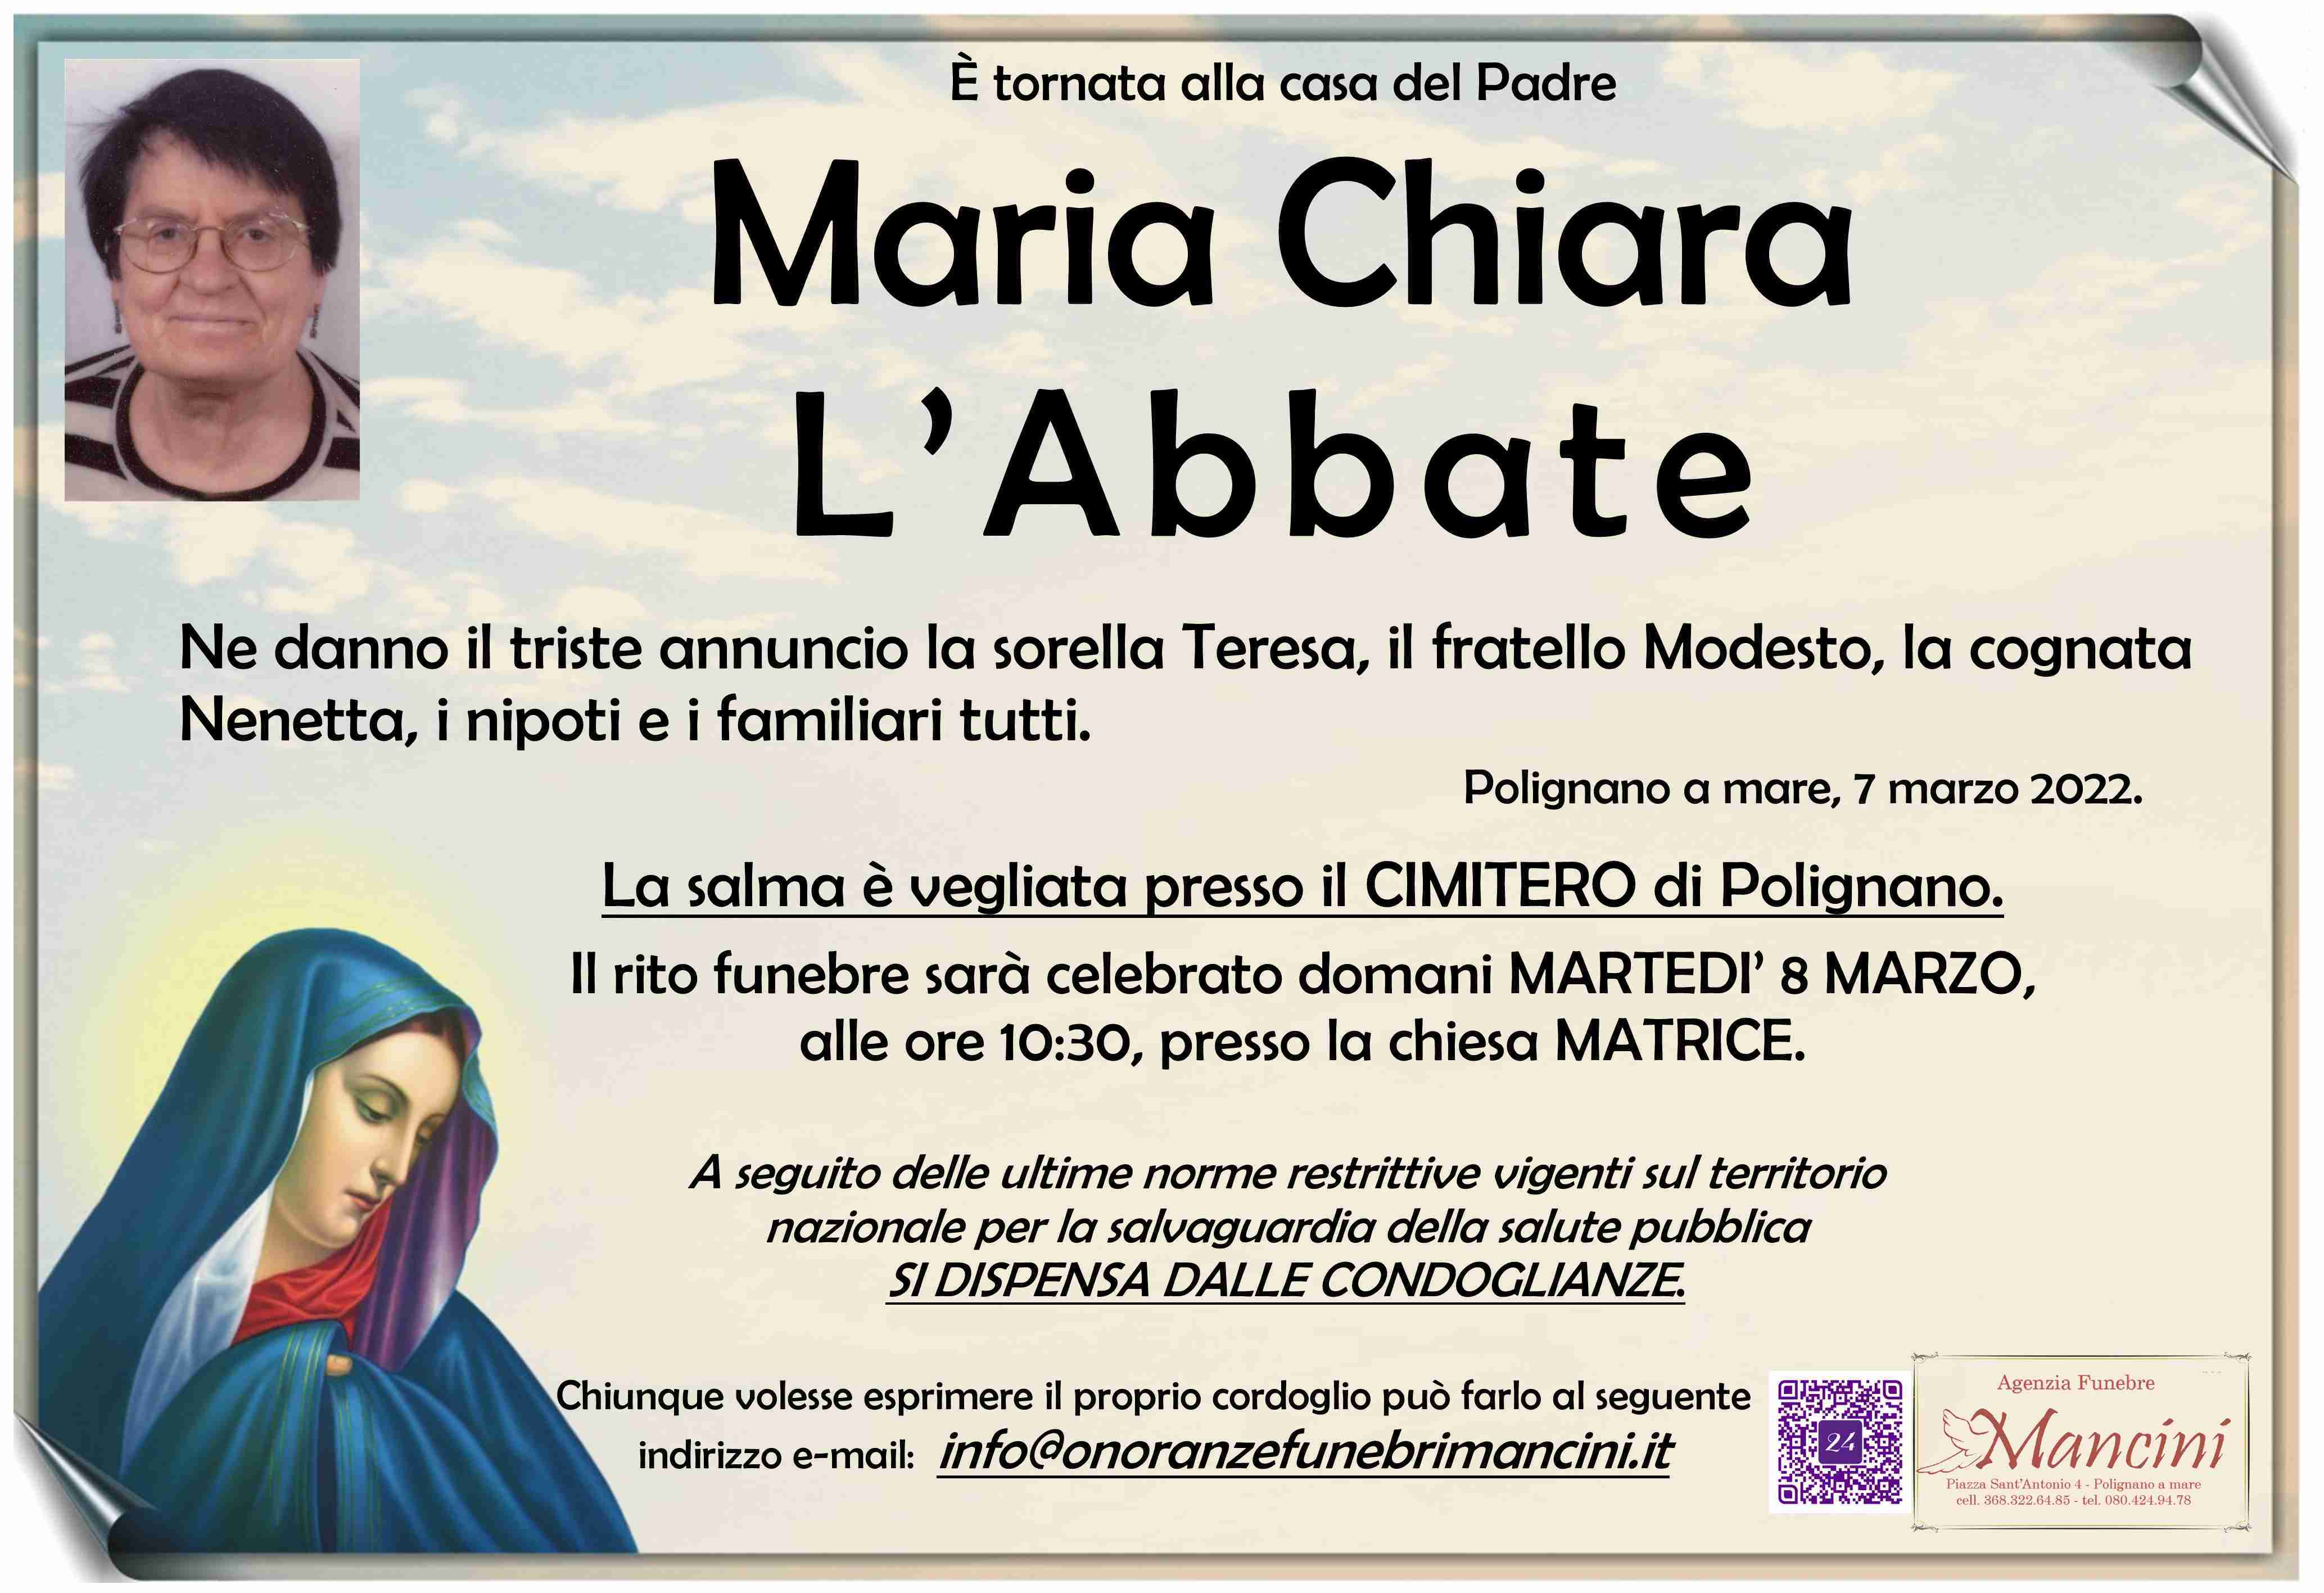 Maria Chiara L'Abbate